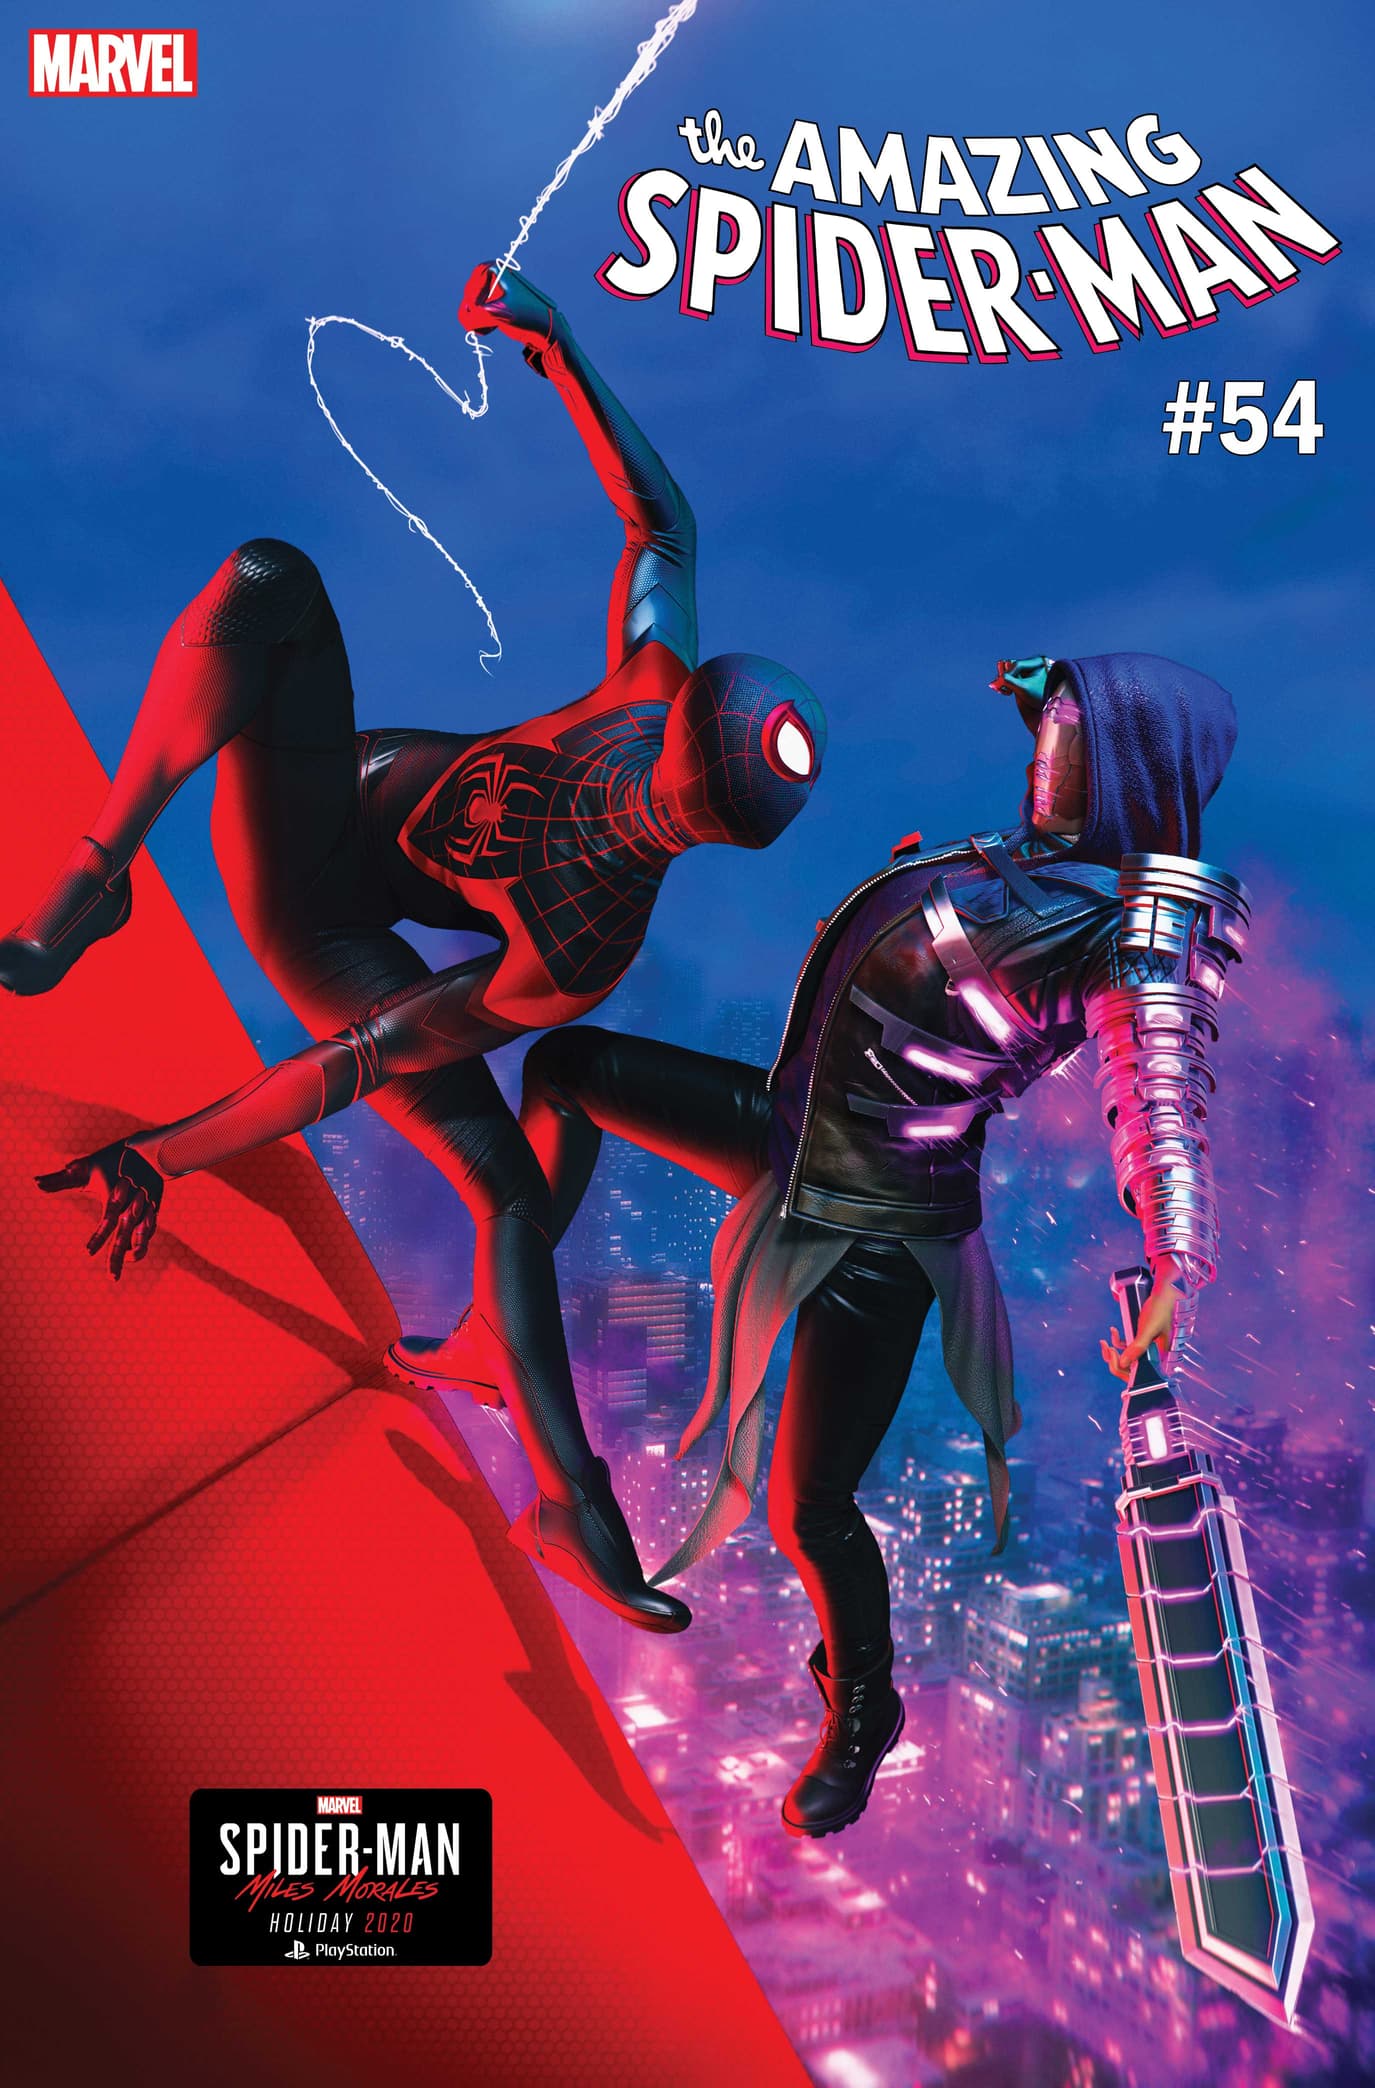 AMAZING SPIDER-MAN #54 cover by Insomniac Games art director Gavin Goulden 